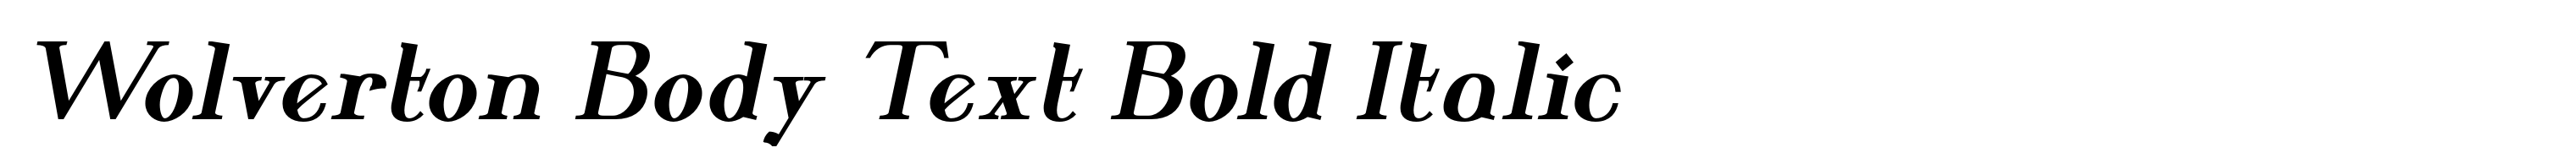 Wolverton Body Text Bold Italic